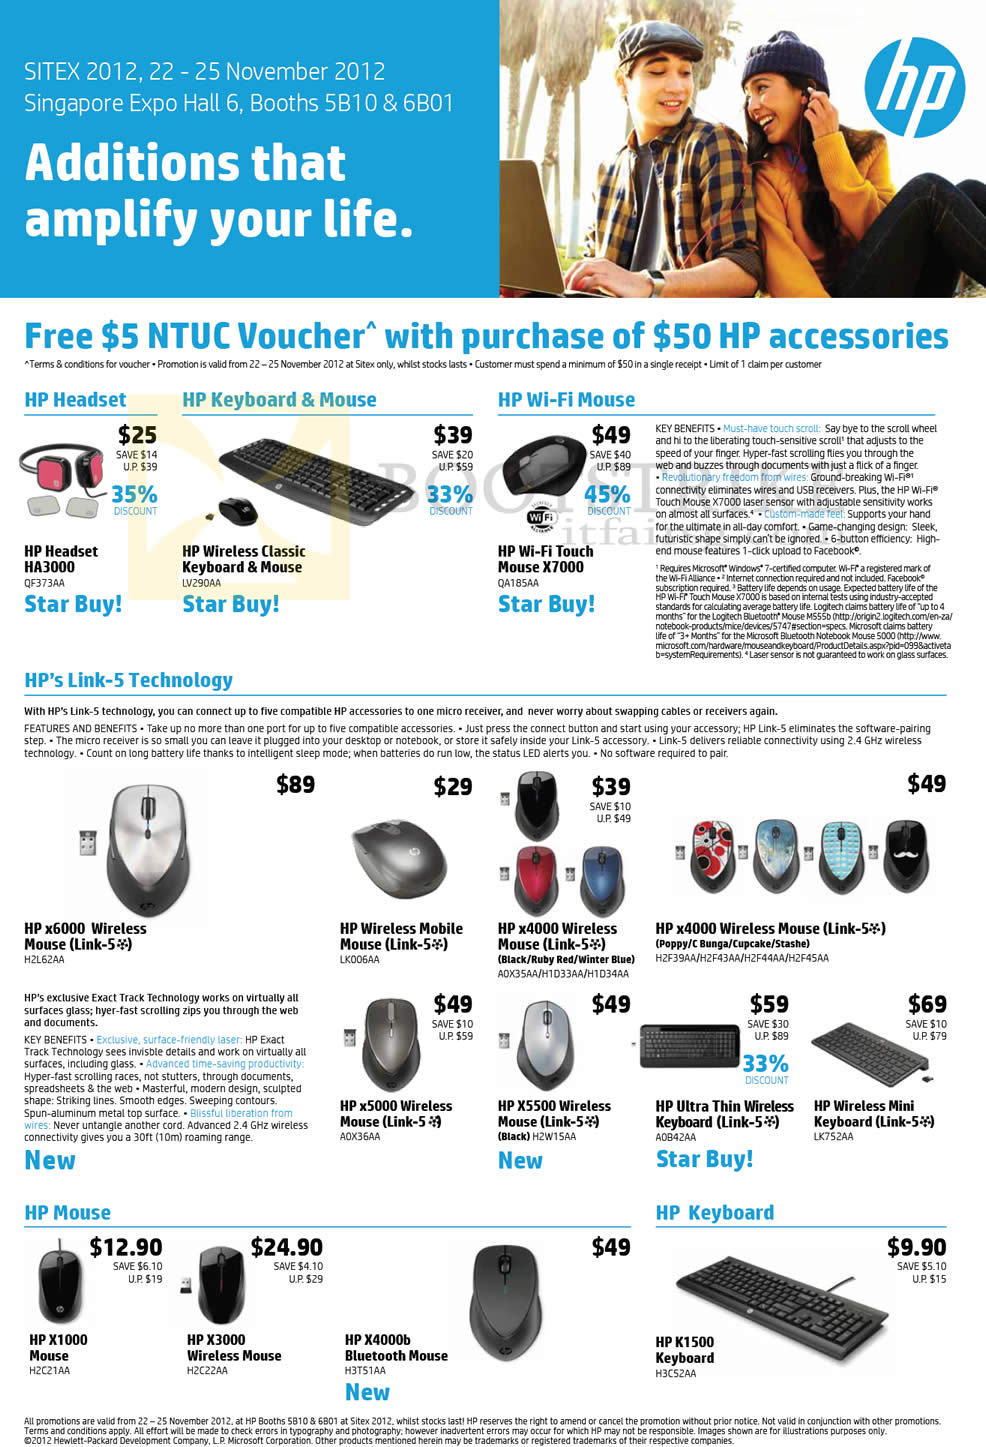 SITEX 2012 price list image brochure of HP Accessories Headset, Keyboard K1500, Wireless Wifi Mouse X7000, X6000, X3000, X4000